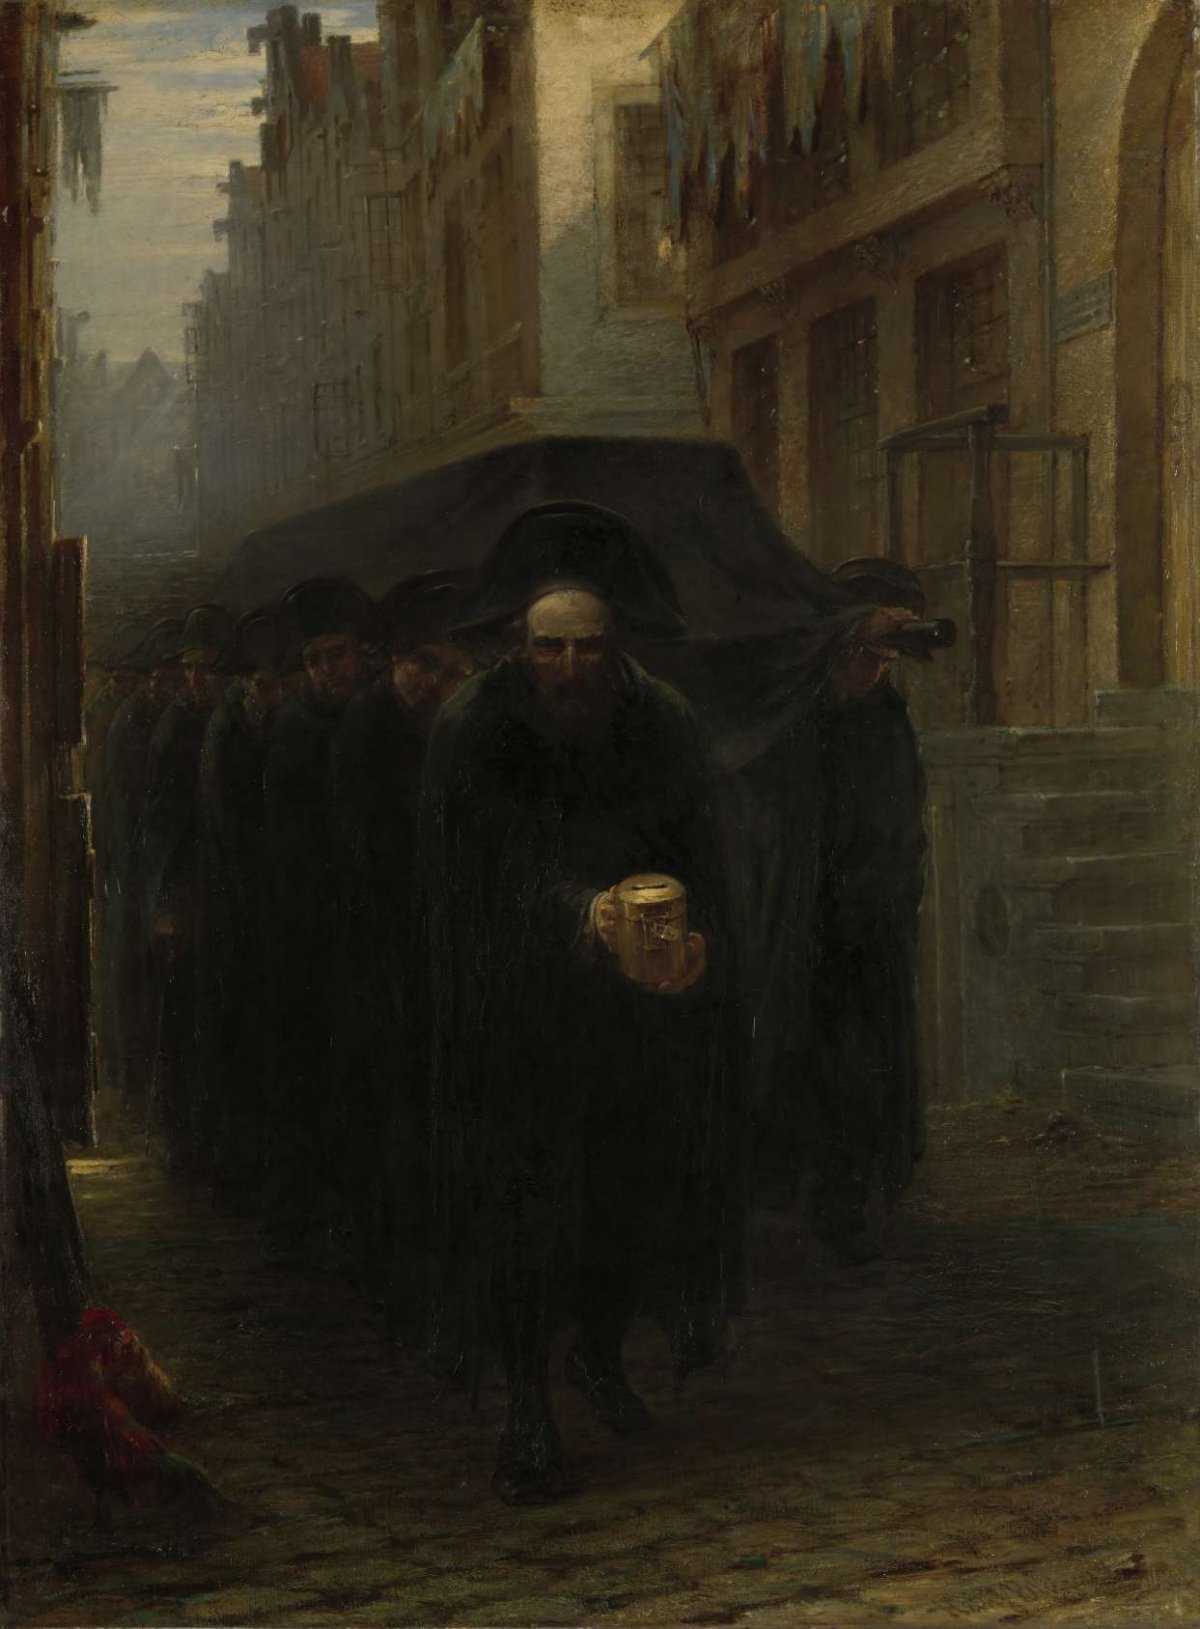 A Jewish Funeral, Hein Burgers, 1860 - 1899